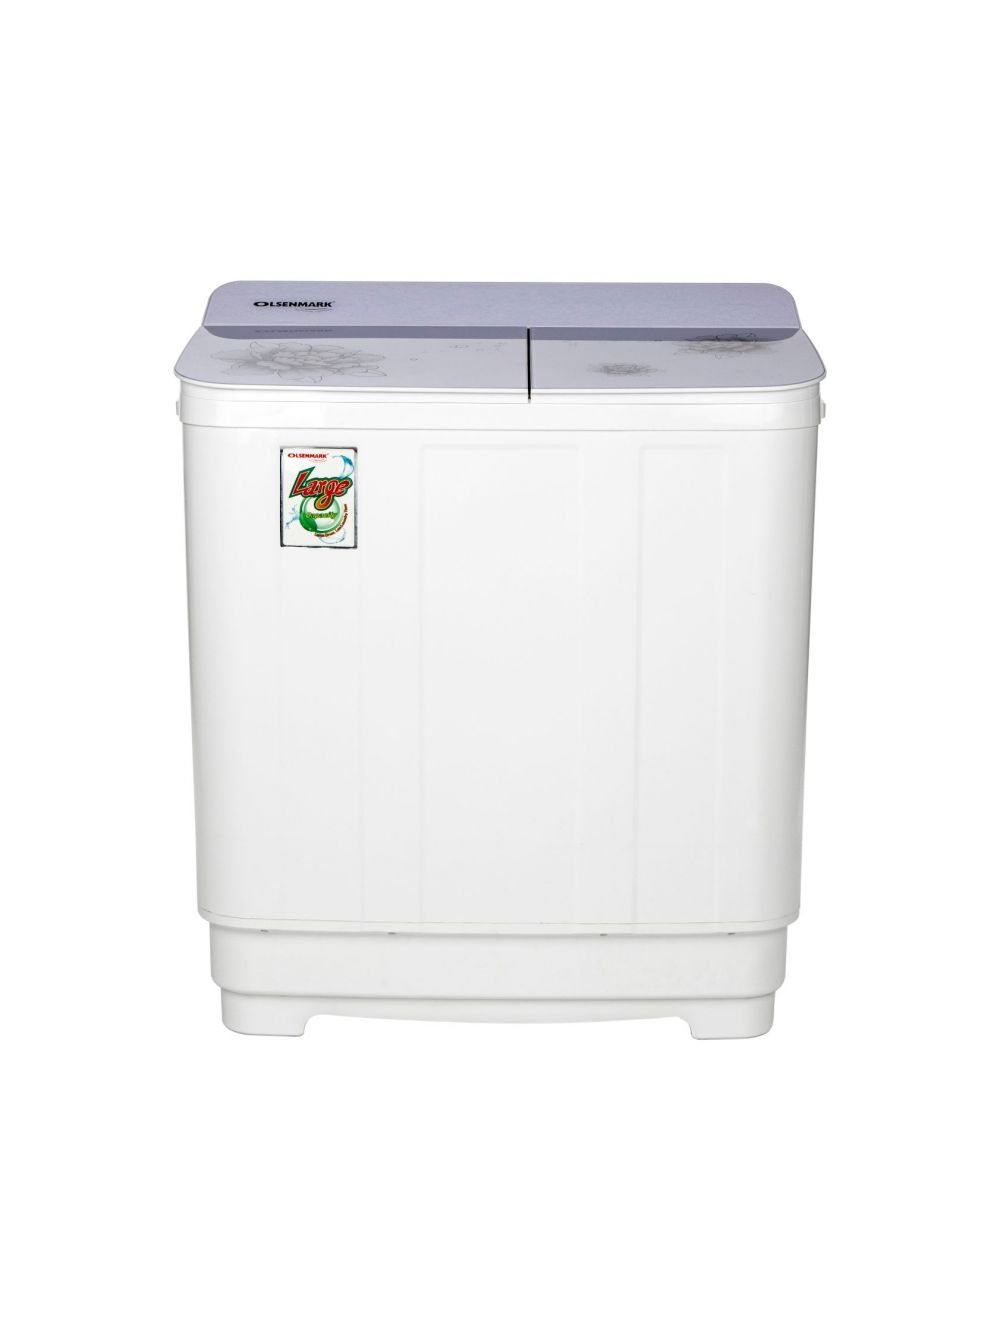 Olsenmark Semi Automatic Washing Machine, 8.5 Kg